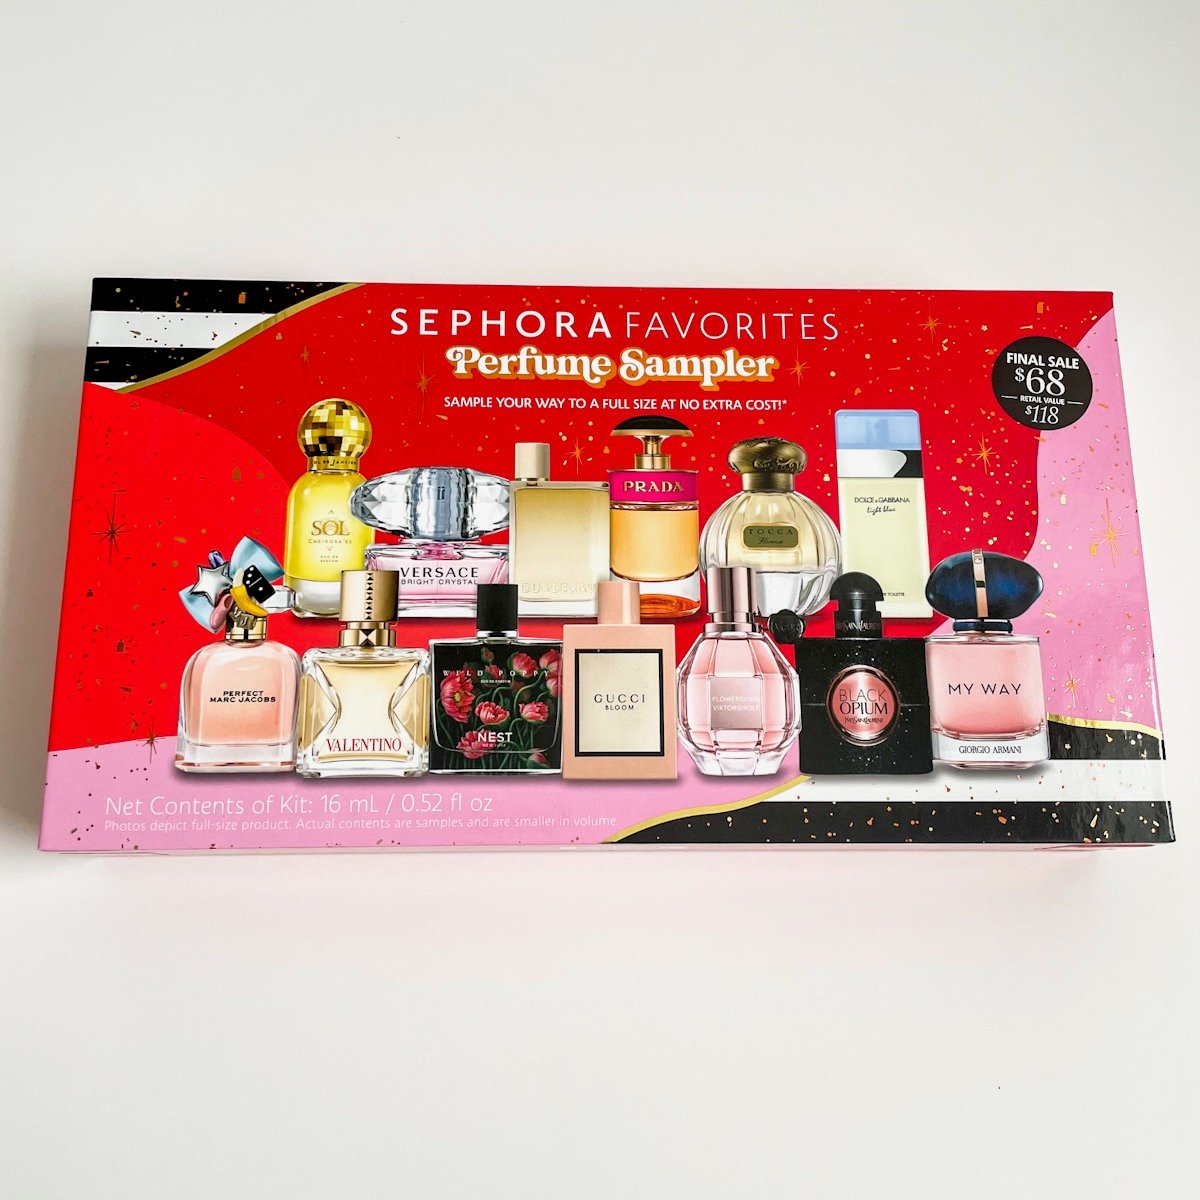 Sephora Favorites: Bestsellers Perfume Sampler Set Review | MSA